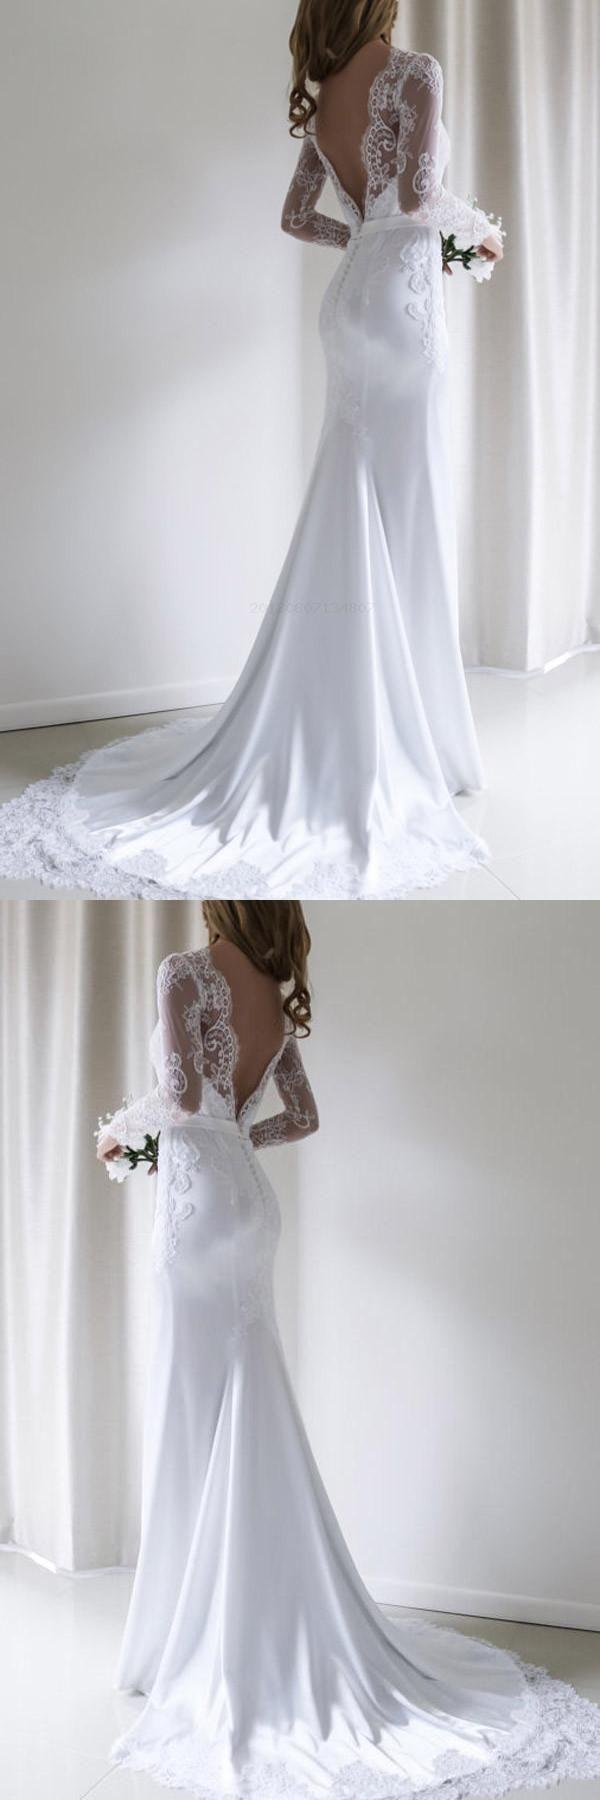 Mariage - Hot Sale Admirable Mermaid Wedding Dresses Elegant Lace Long Sleeves Mermaid White Long Wedding Dress With Train